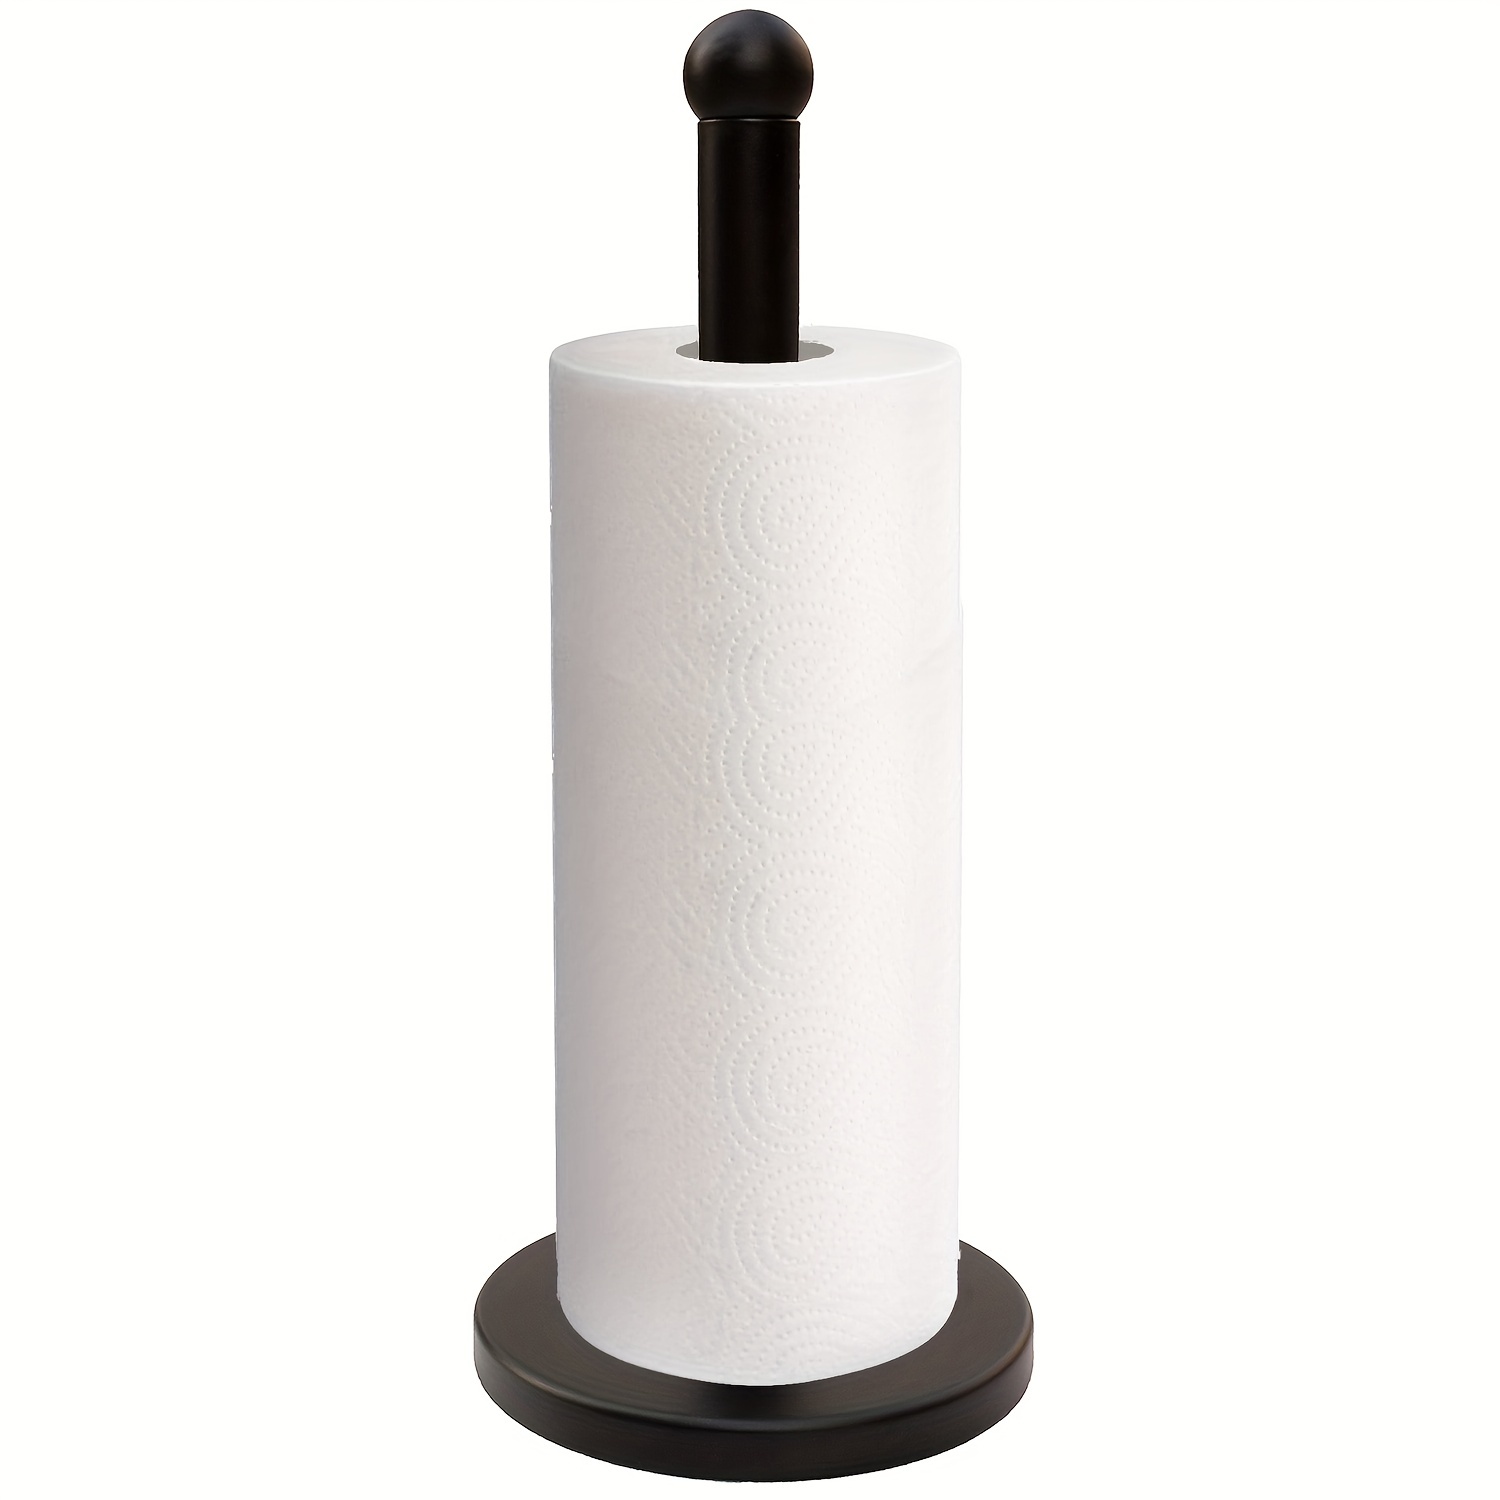 Umbra Nickel Tug Wall-Mount Paper Towel Holder